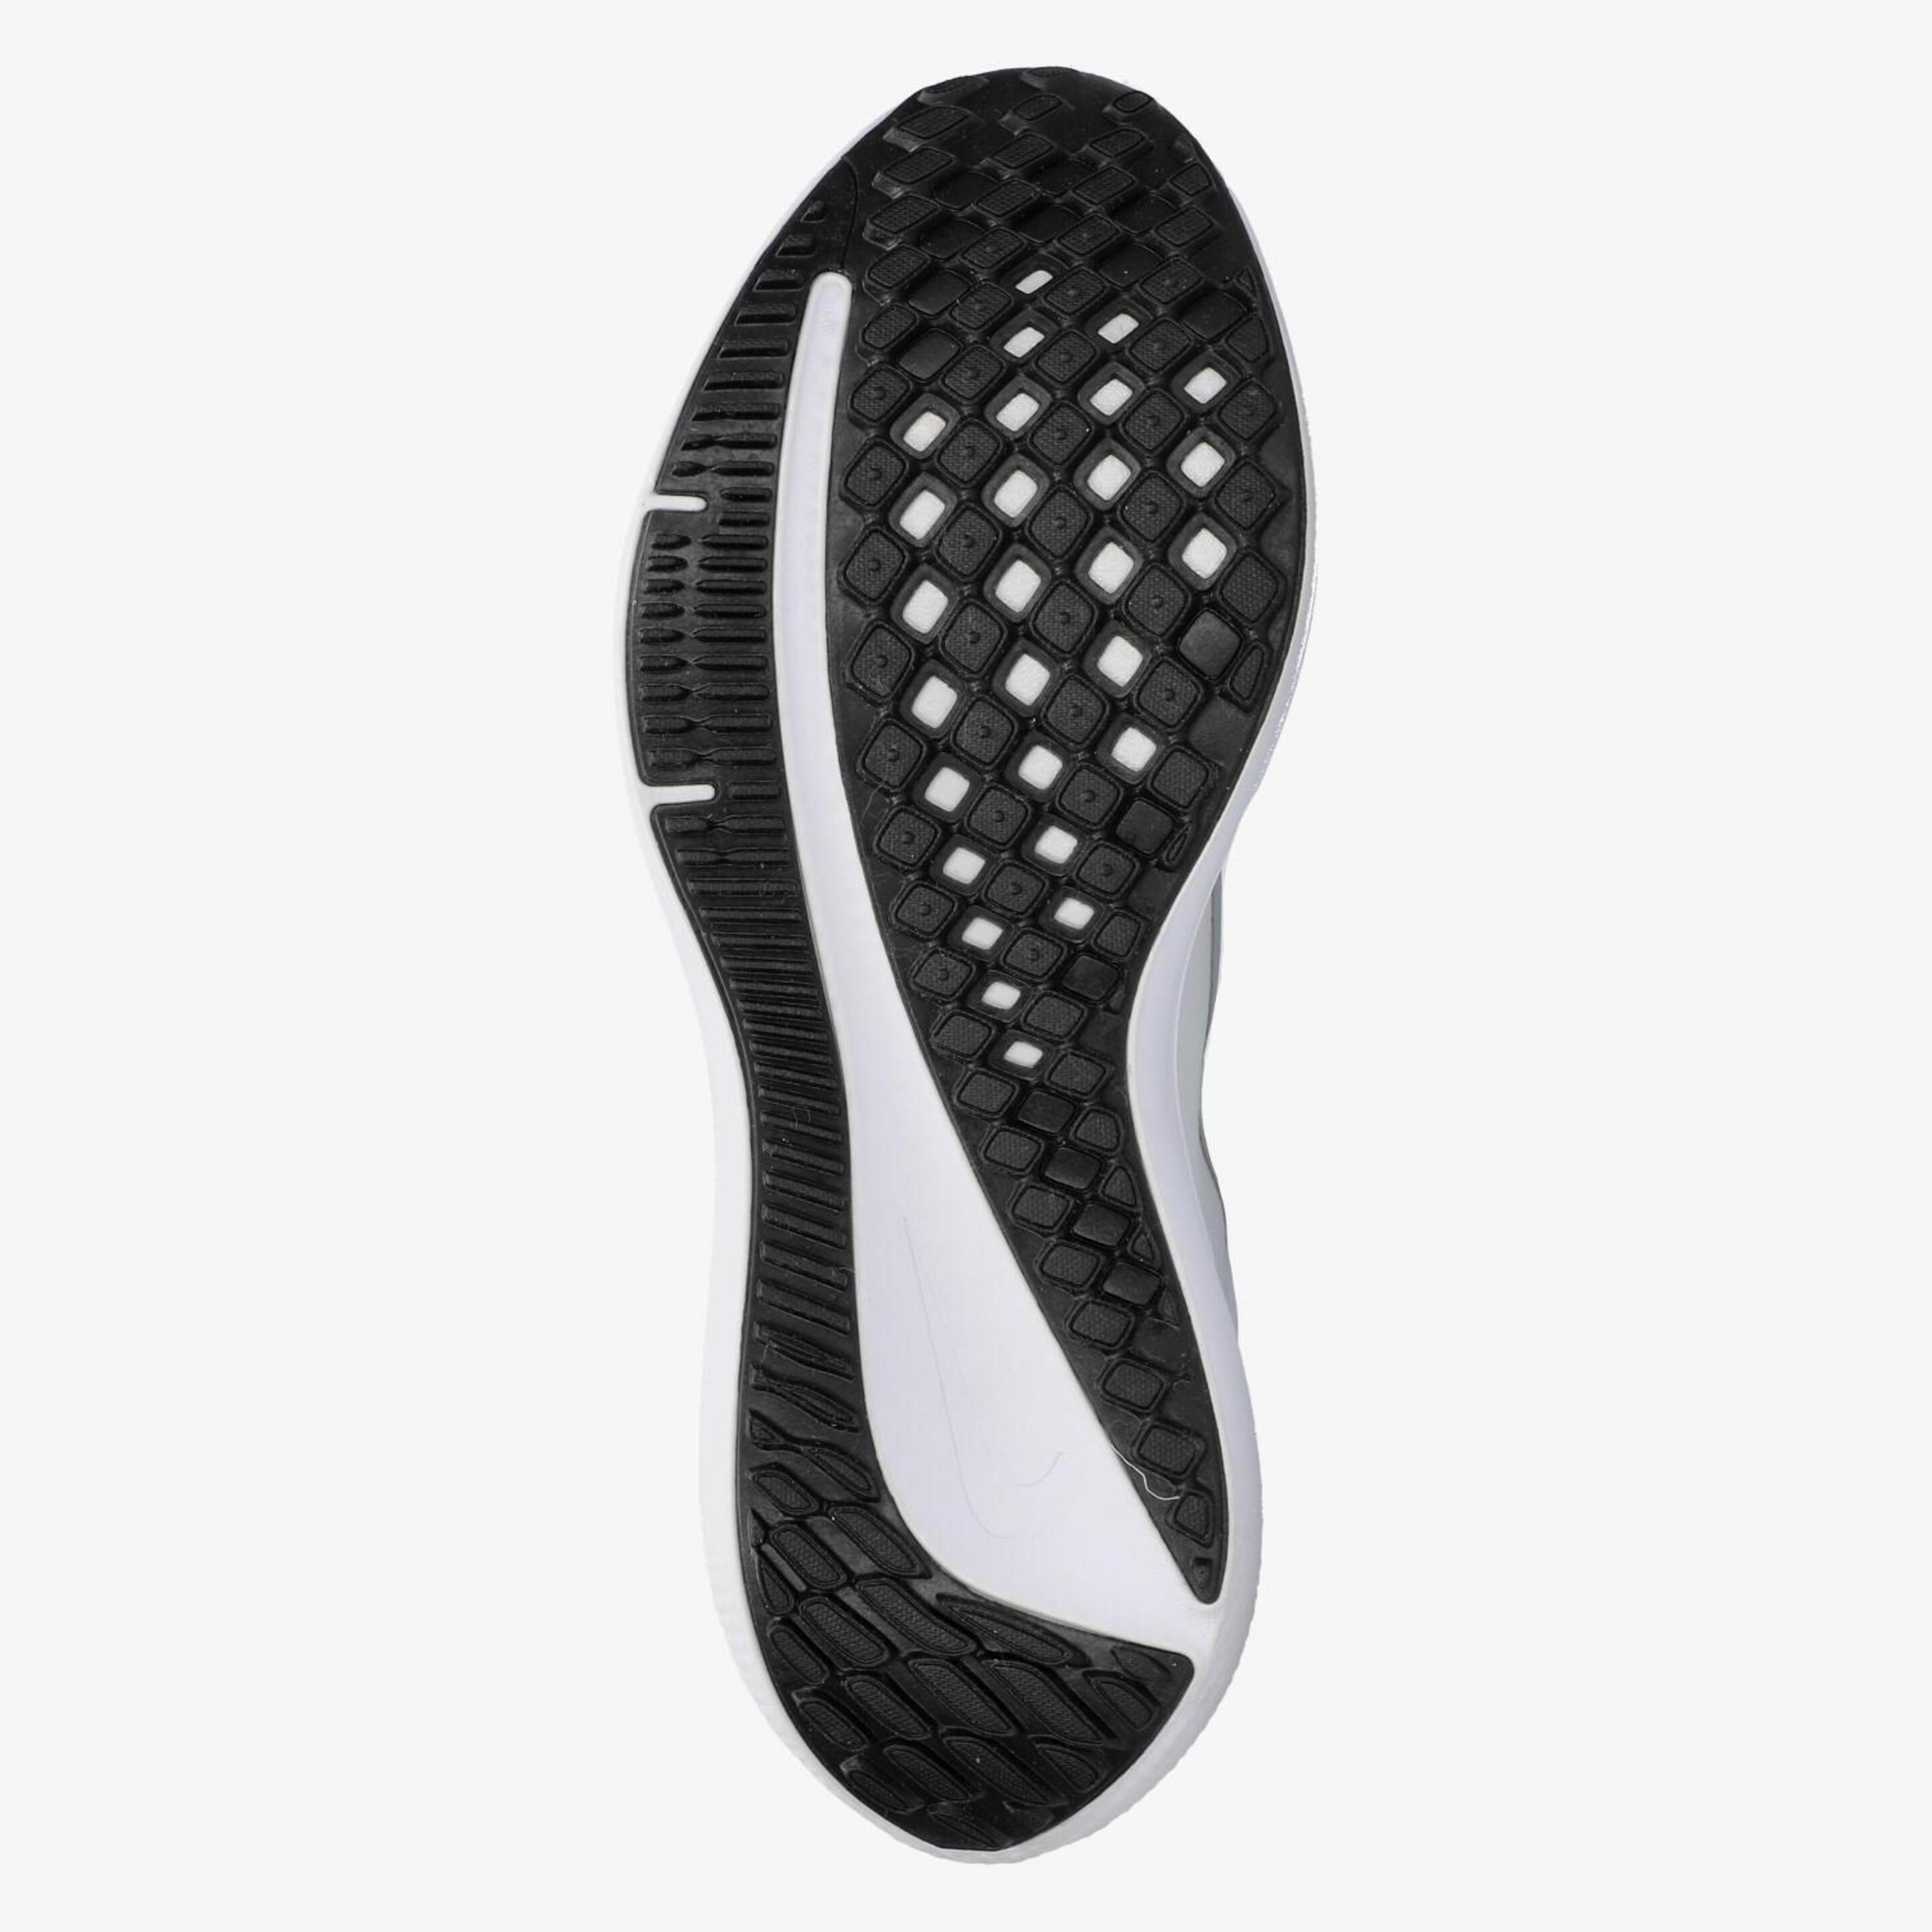 Nike Air Winflo 10 - Blanco - Zapatillas Running Hombre